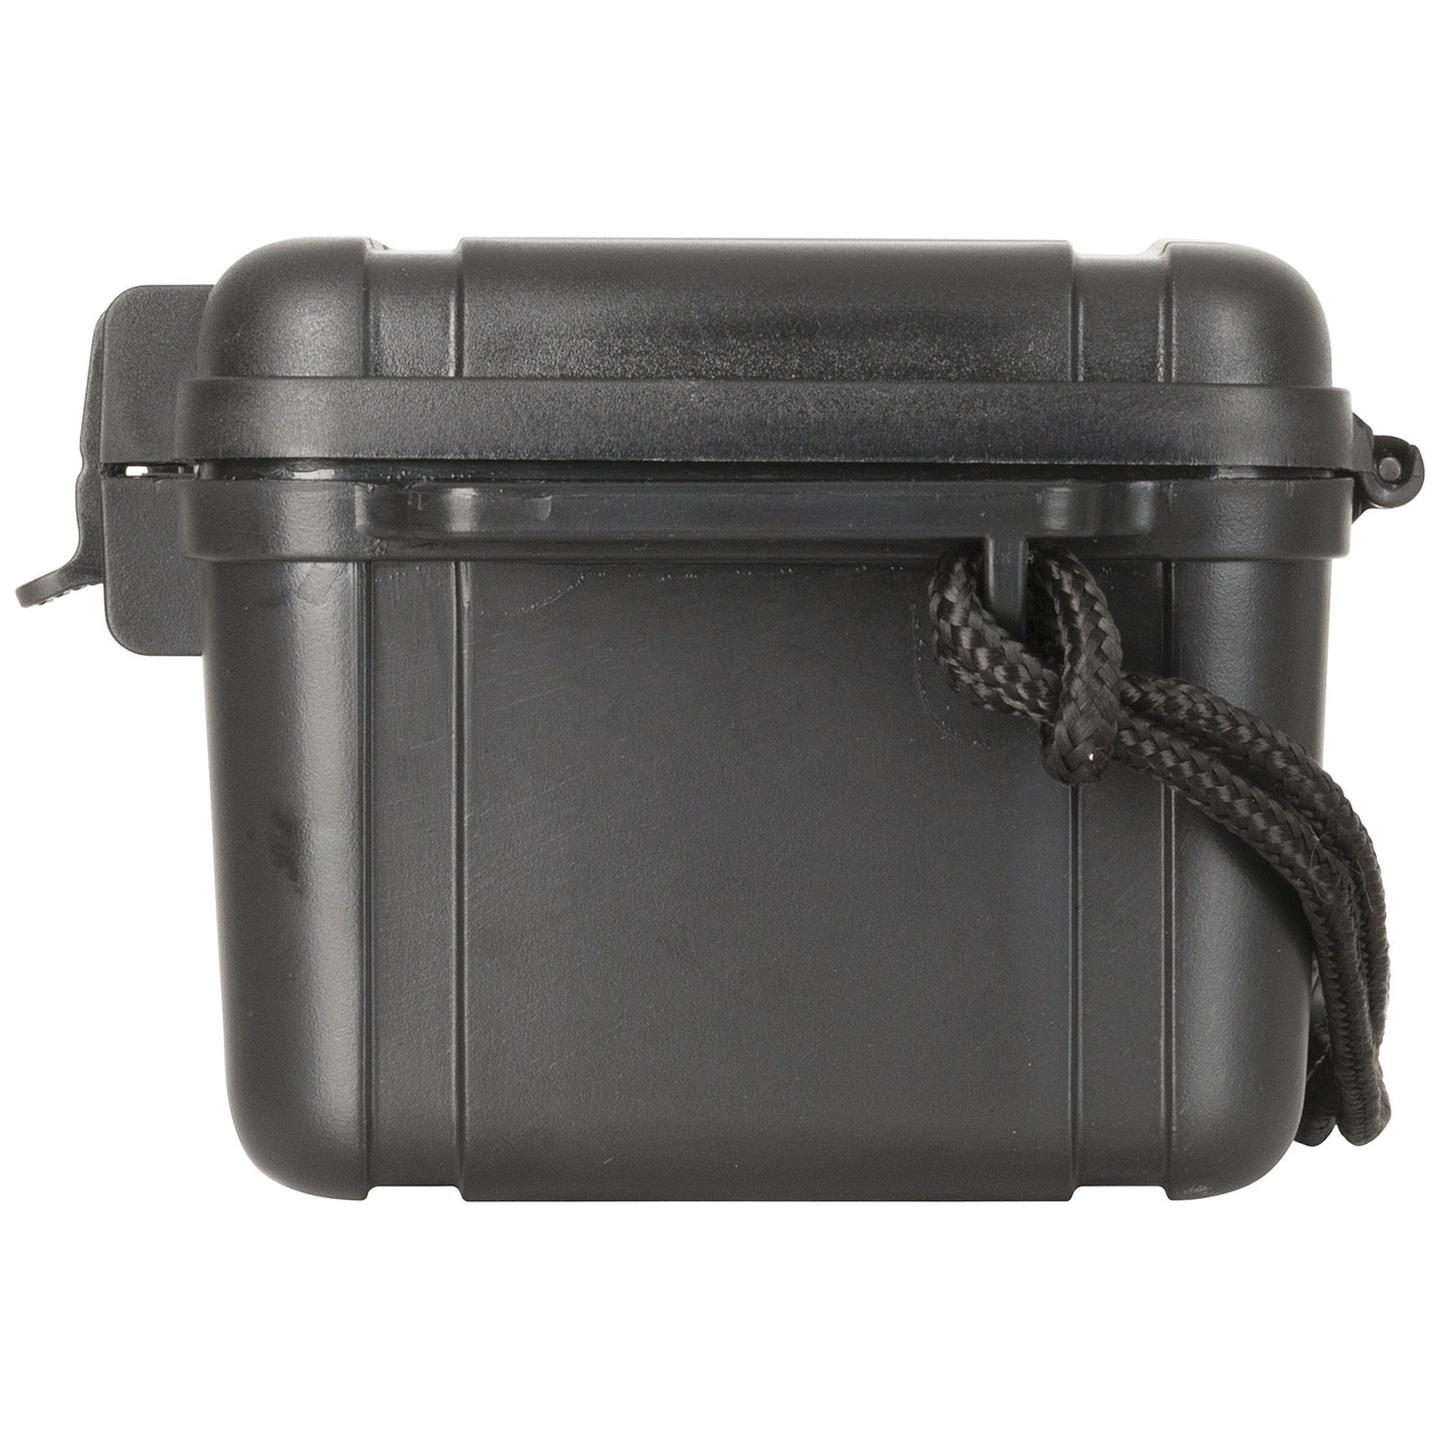 Black Waterproof ABS Plastic Case - 182 x 120 x 75mm